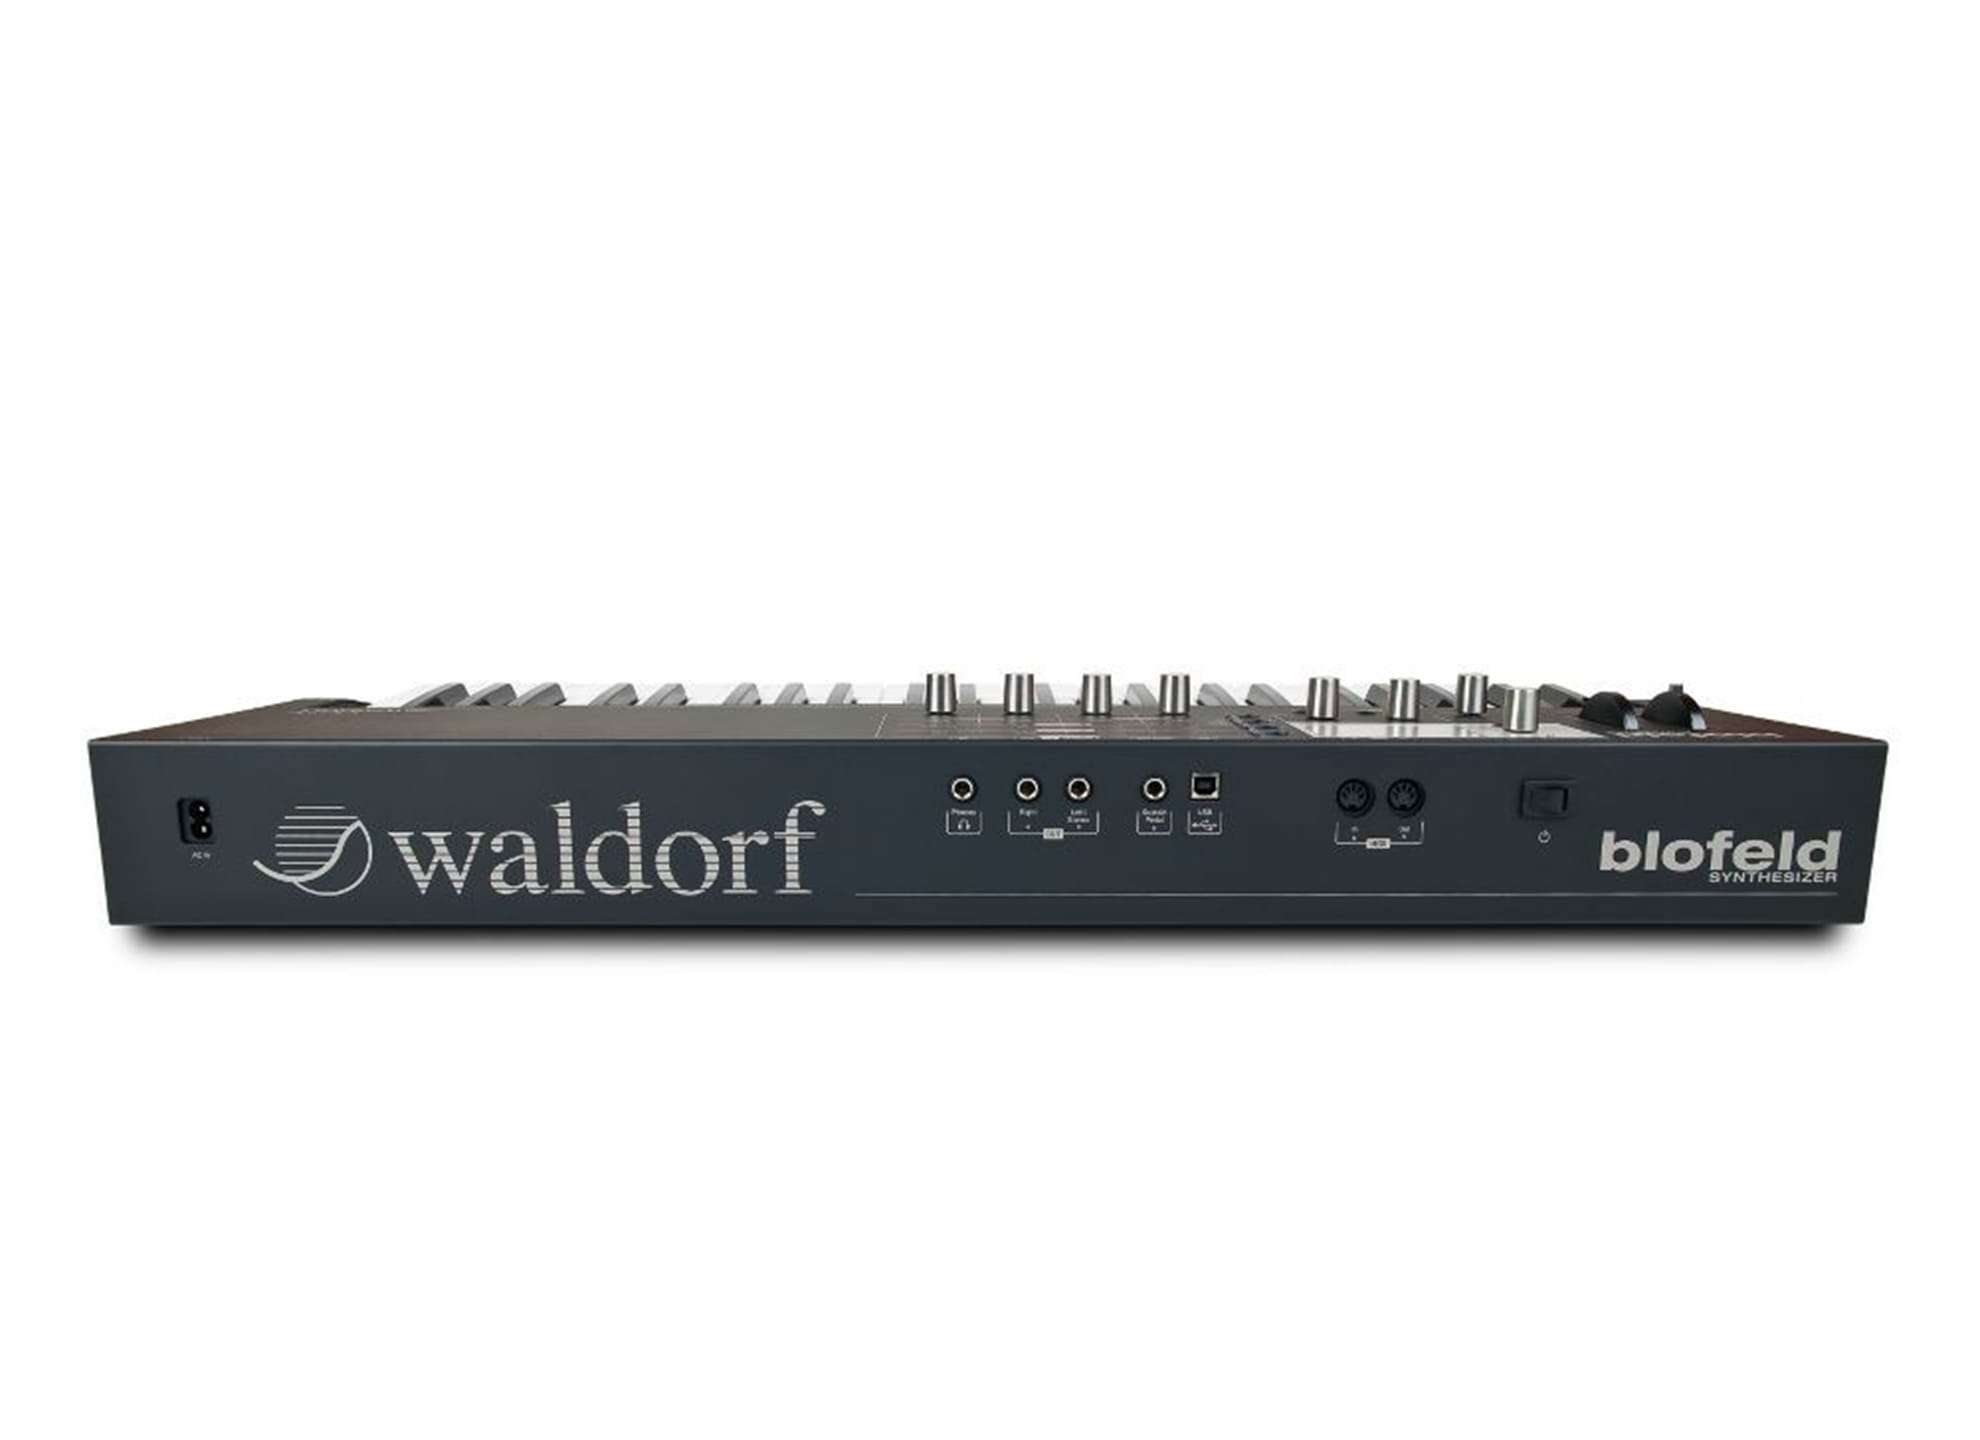 Blofeld Keyboard Black